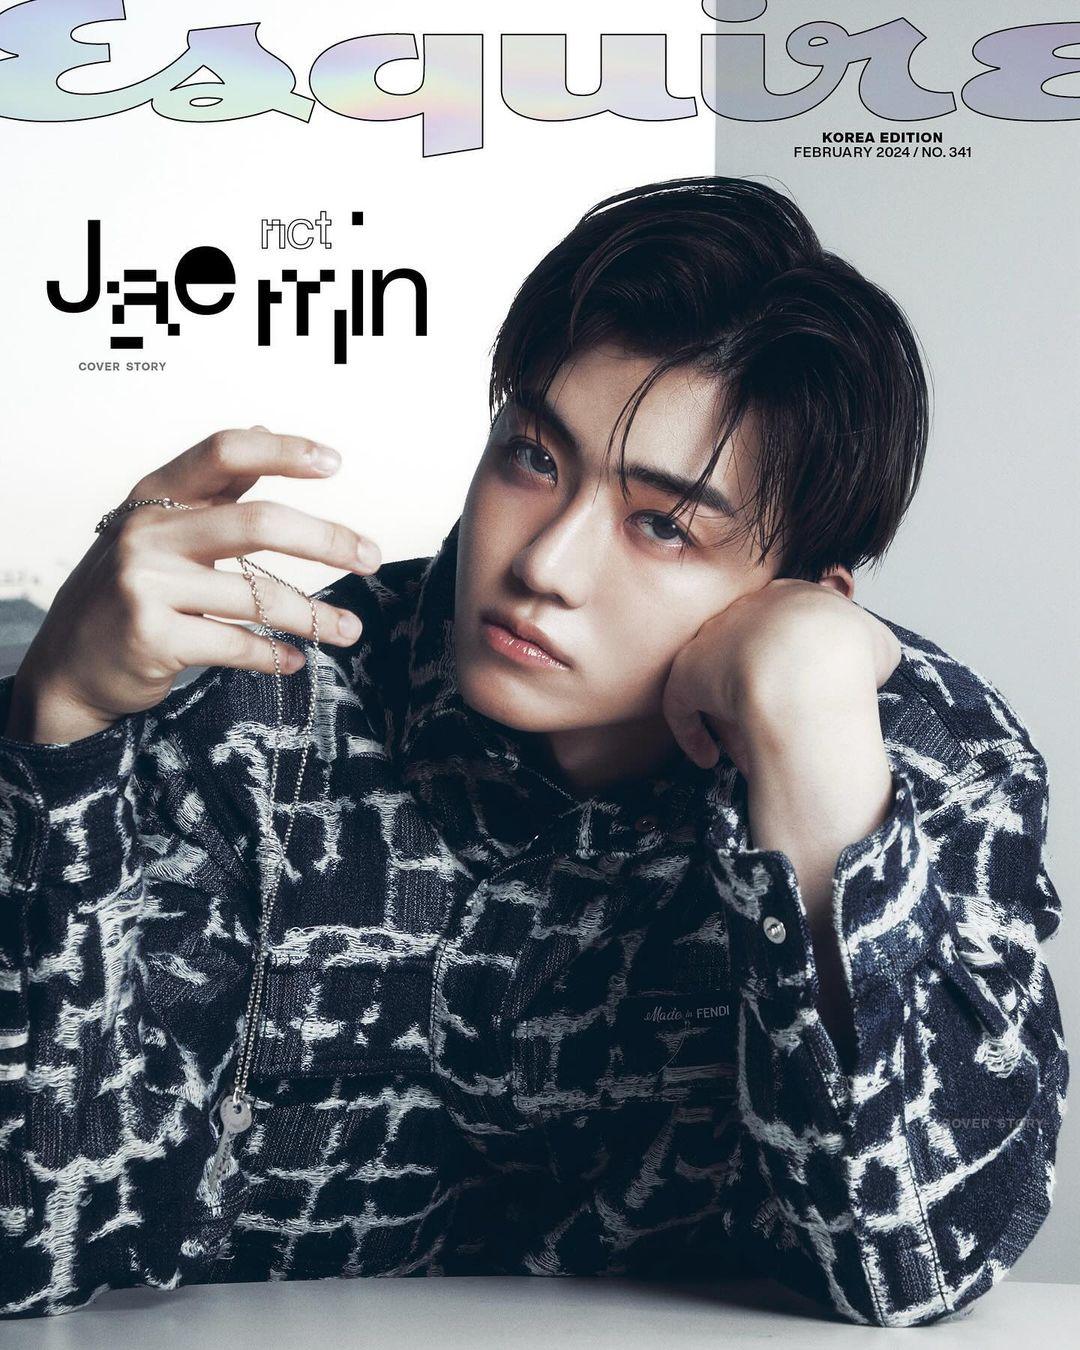 Jaemin wore #FendiSS24 on the cover of Esquire Korea.

@esquire.korea @na.jaemin0813

Editor: @deveikuus 
Photography: @leeejunkyoung
Art Design: Kim Dae Seop
 
Stylist: @komaedd
Hair: @bit.boot_naejoo
Makeup: Jung Soo Yeon